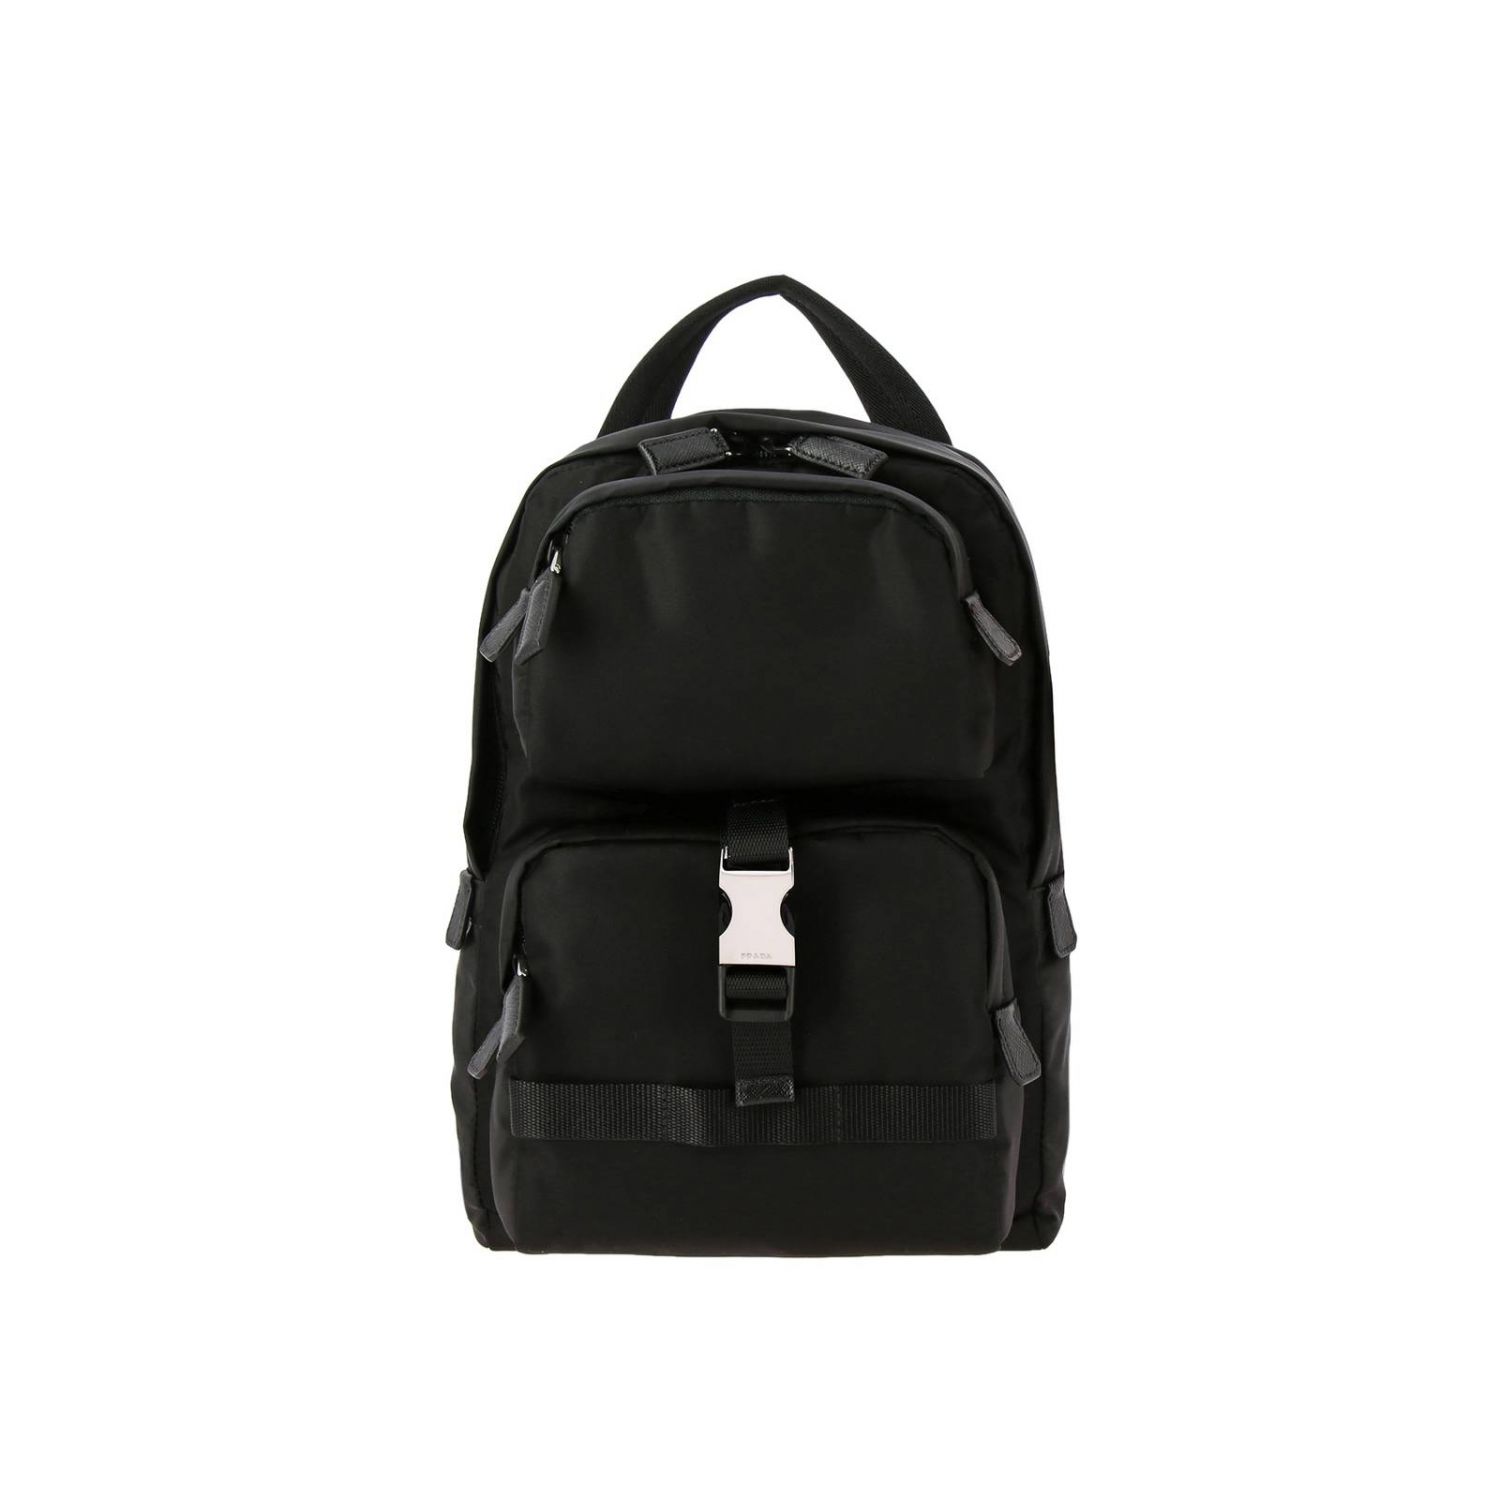 PRADA: small shoulder bag in nylon with multi-pockets and metal buckle -  Black | Prada backpack 2VZ013 OOO 973 online on 